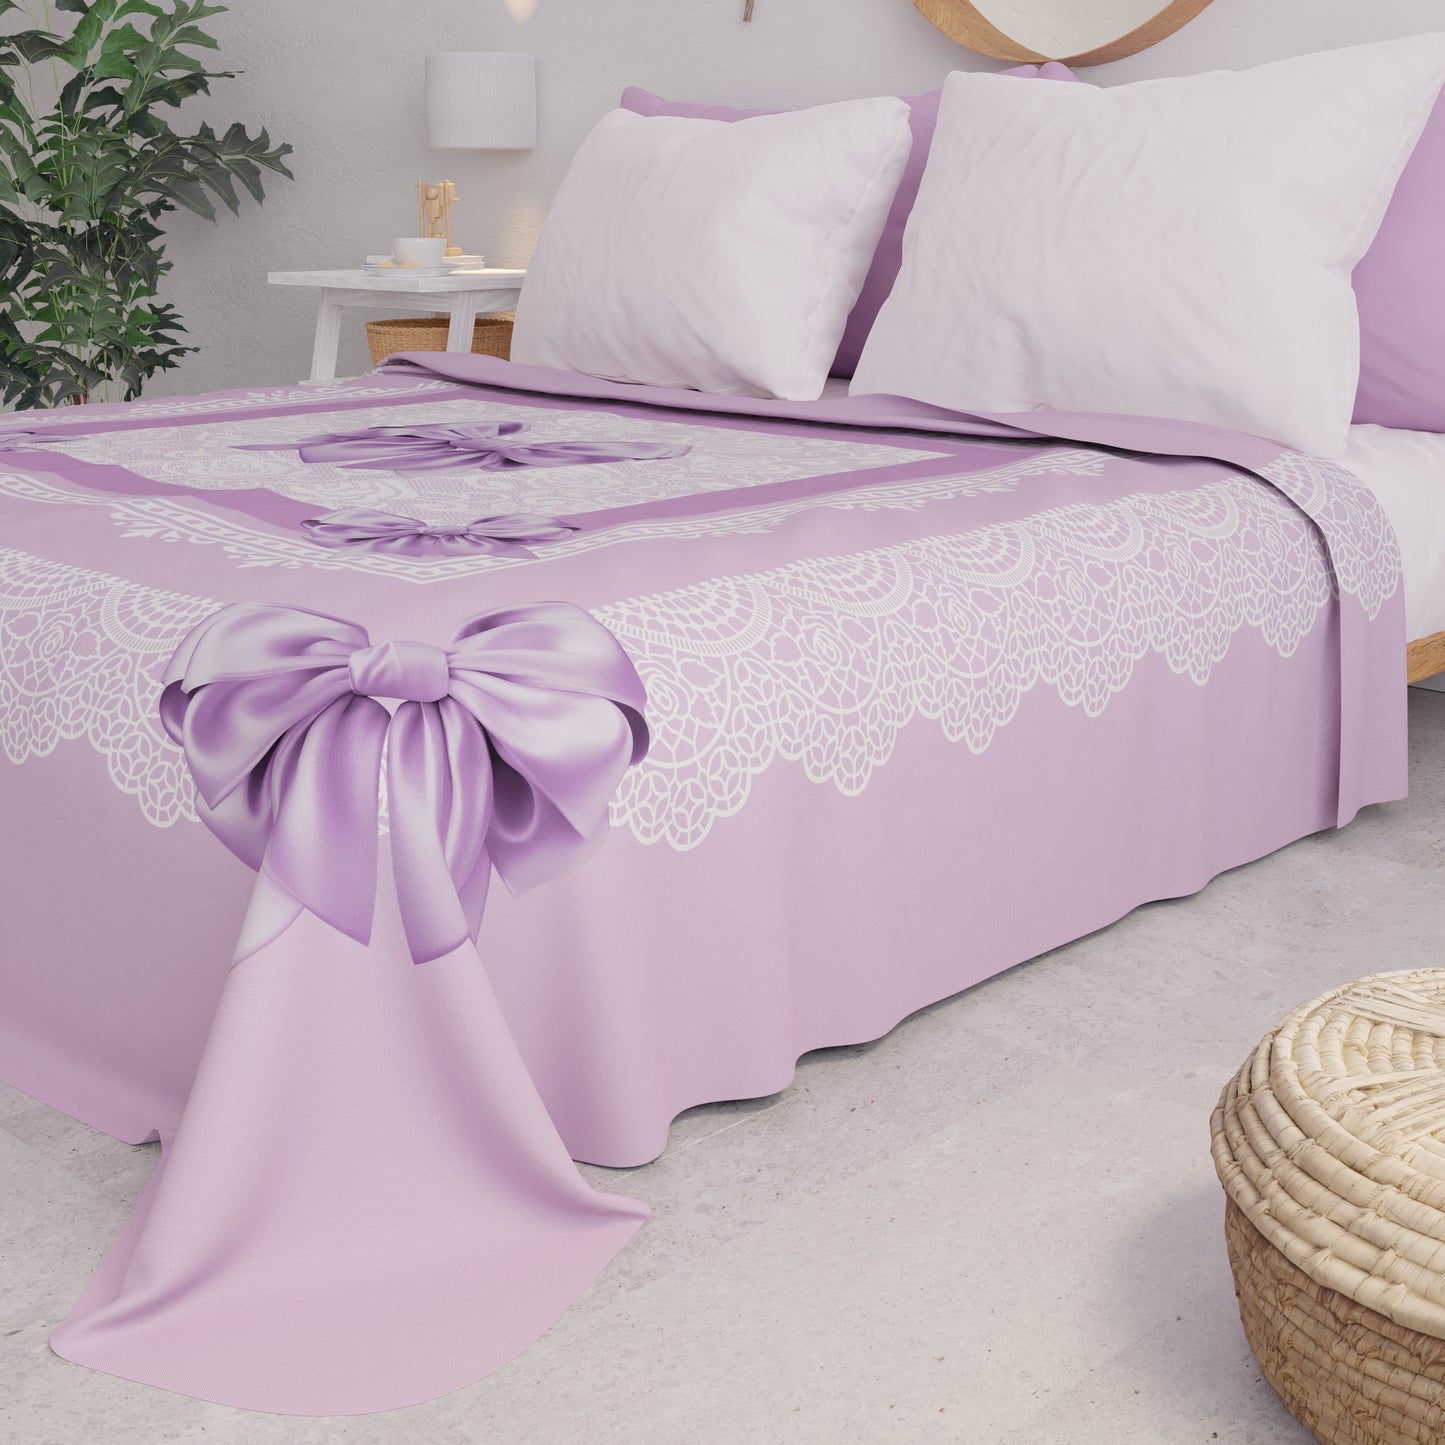 Summer Bedspread, Light Blanket, Bedspread Sheets, Lilac Bow